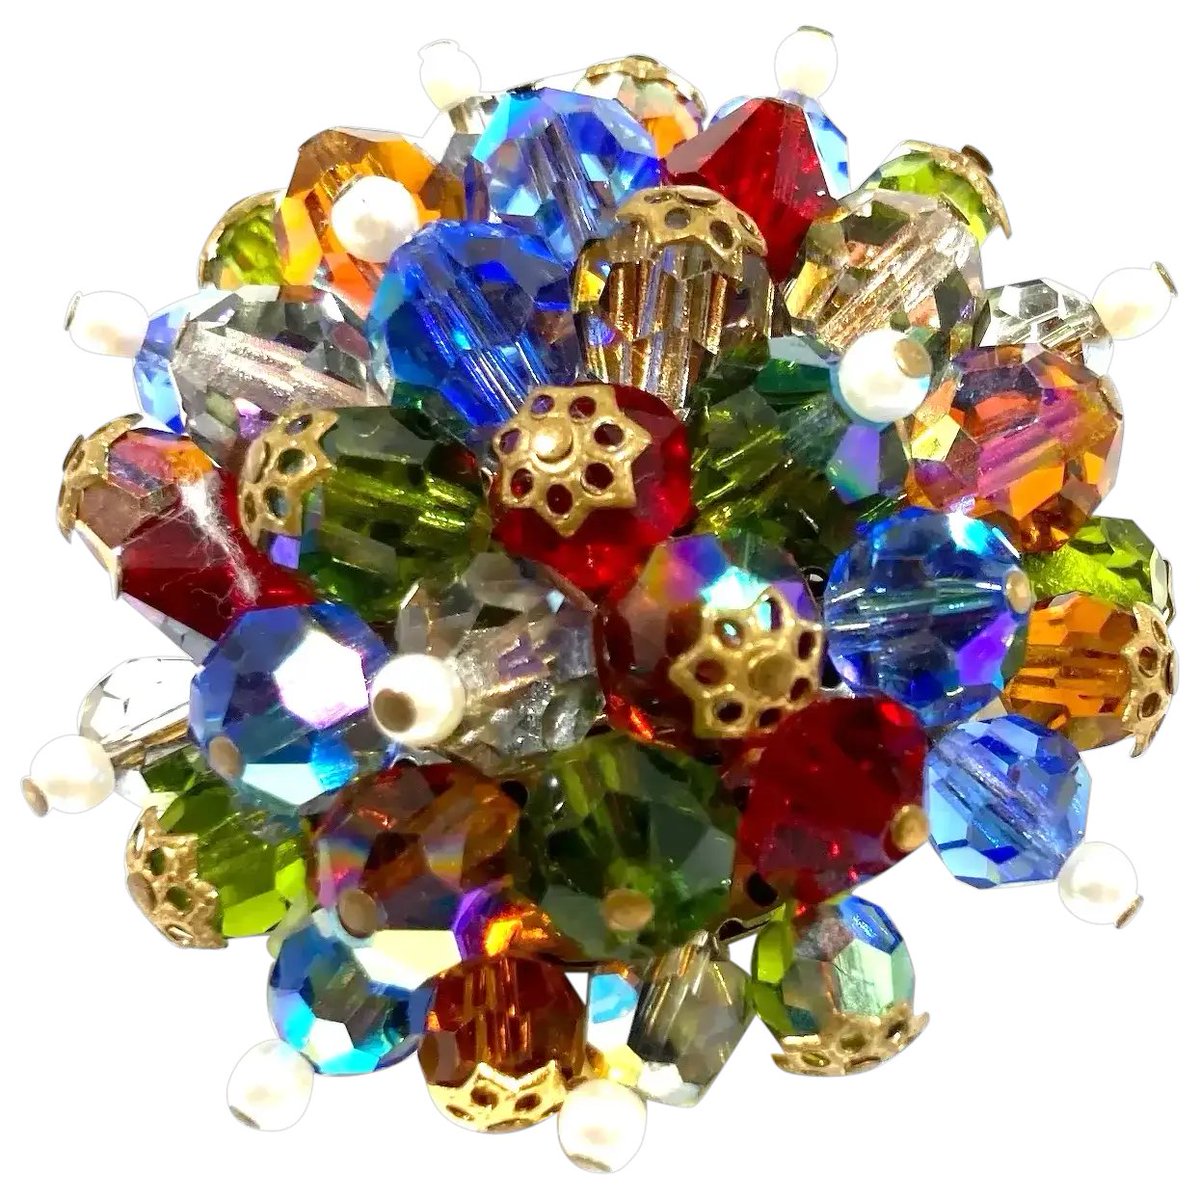 Large Dimensional Multi Colored Faceted Crystal Imitation Pearls Beaded Brooch #rubylane #vintage #brooch #beaded #crystal #vintagejewelry #giftideas #jewelryaddict #vintagebeginshere #fashionista #diva #glam rubylane.com/item/136230-E1…